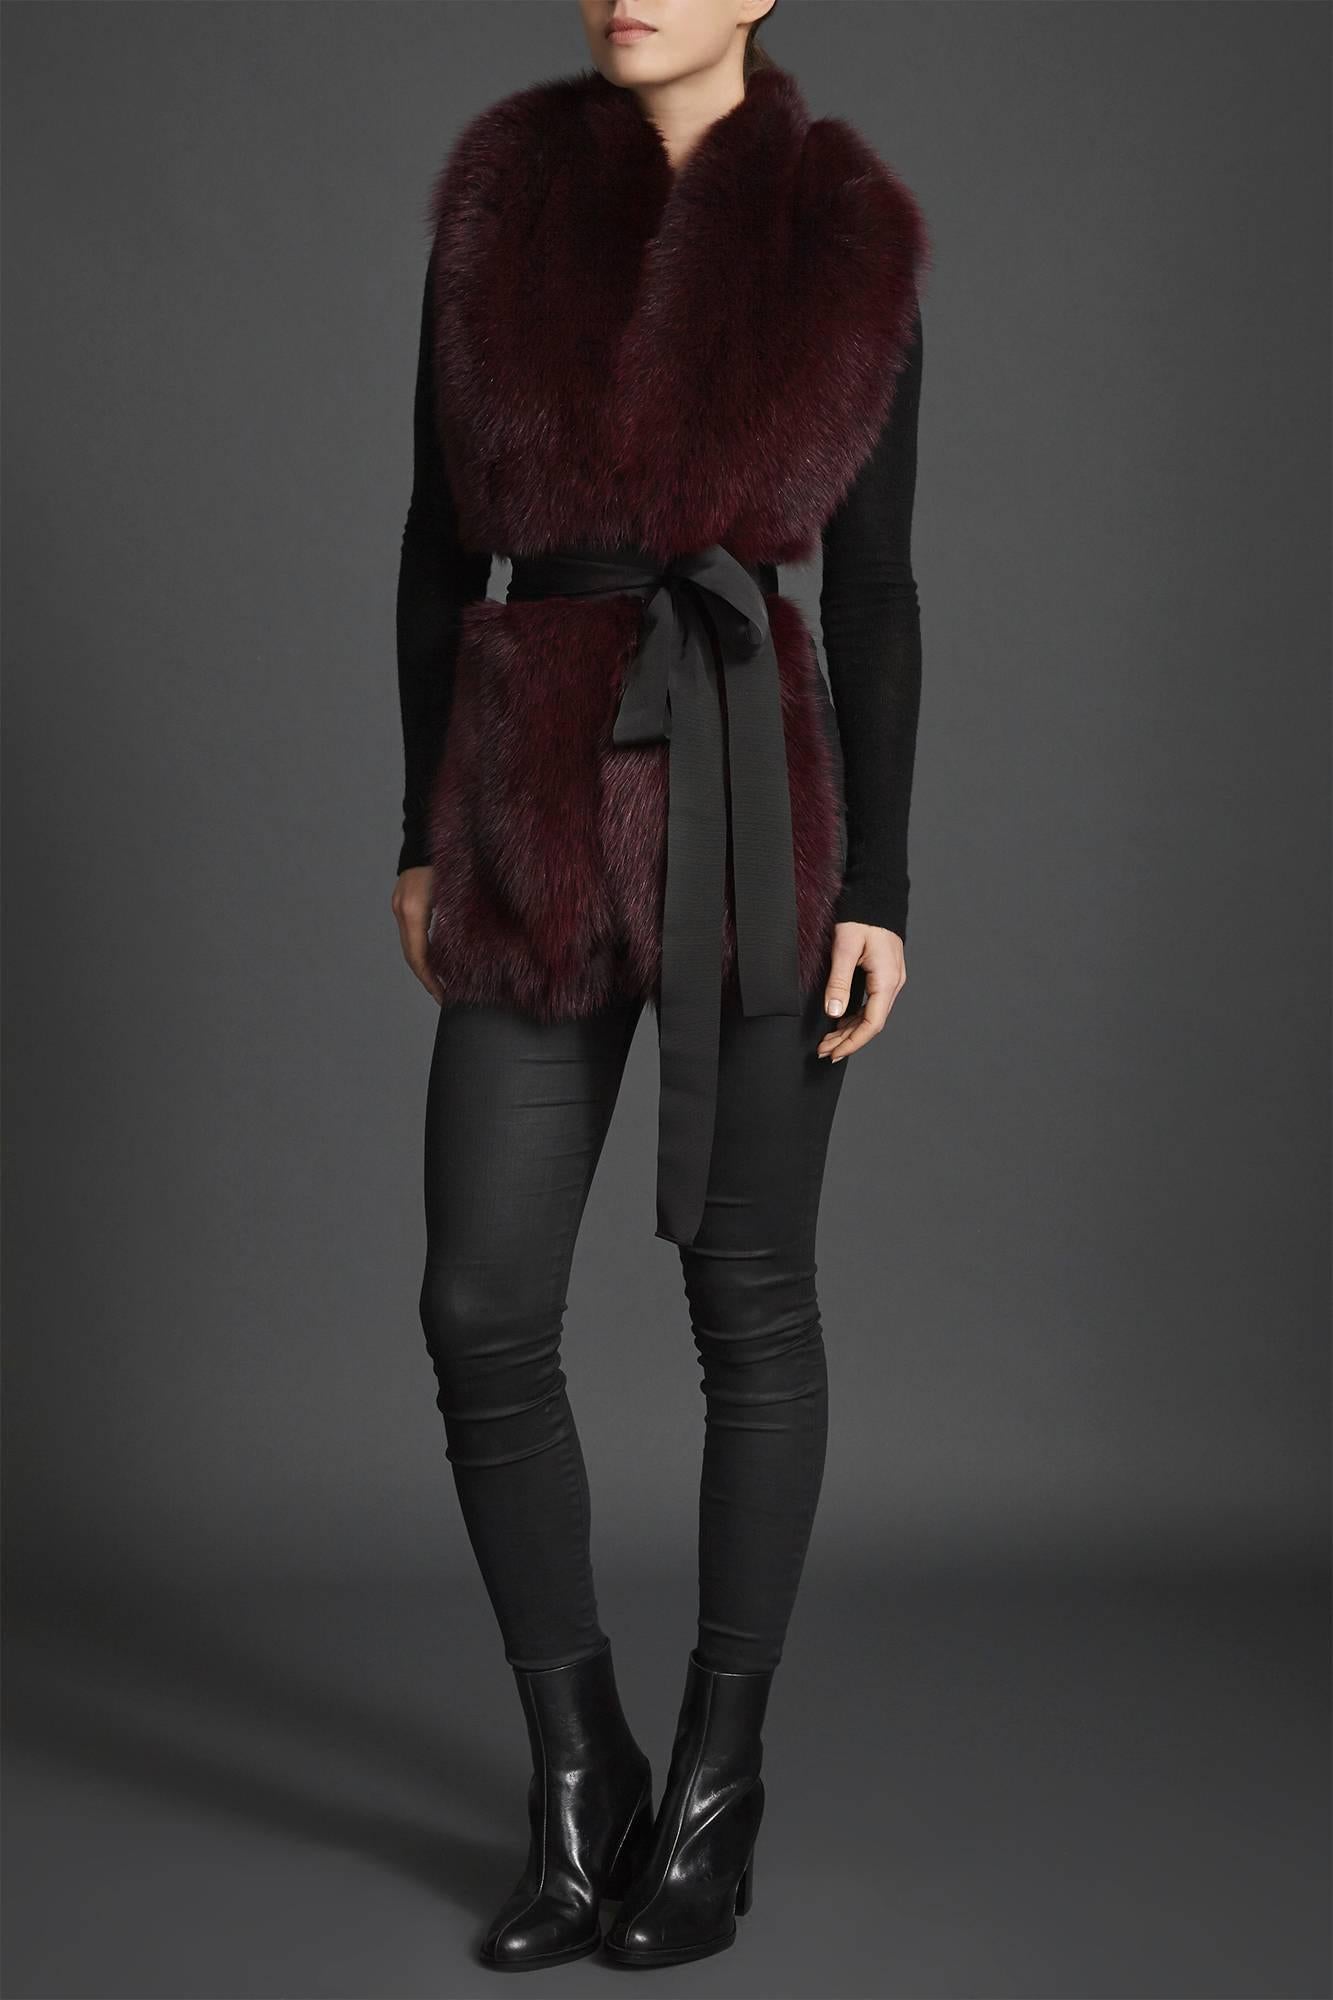 Women's or Men's Verheyen London Legacy Stole in Garnet Burgundy Fox Fur - Brand New